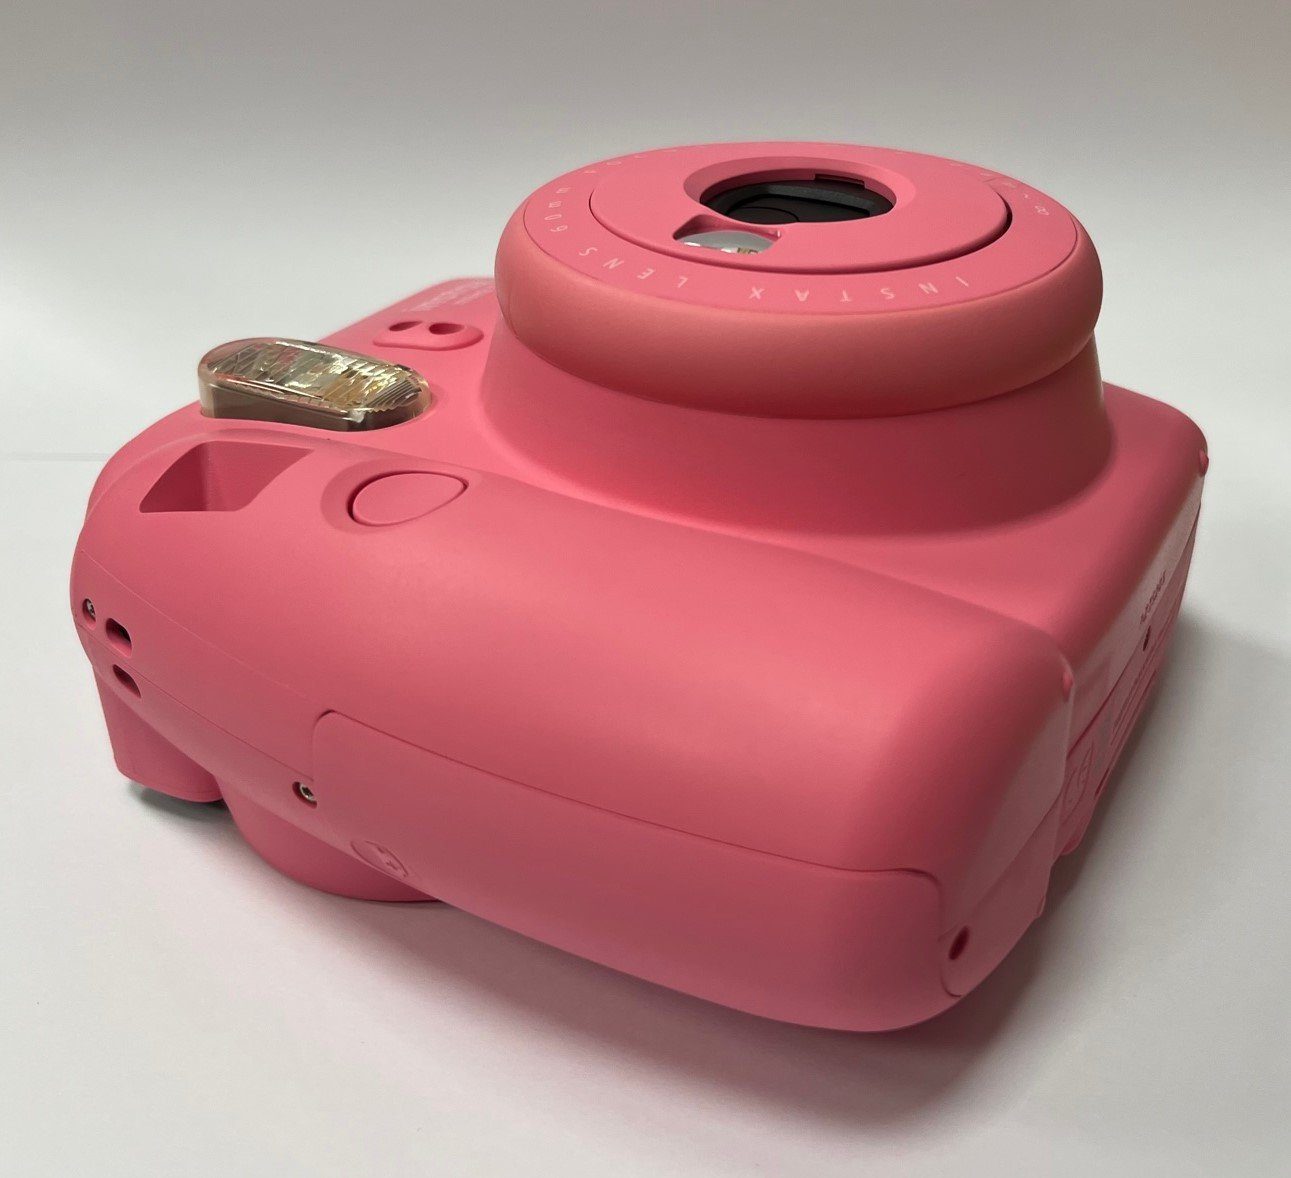 FUJIFILM Instax 9 Sofortbildkamera inklusive Film mit Flamingo-Pink Mini 10 Aufnahmen